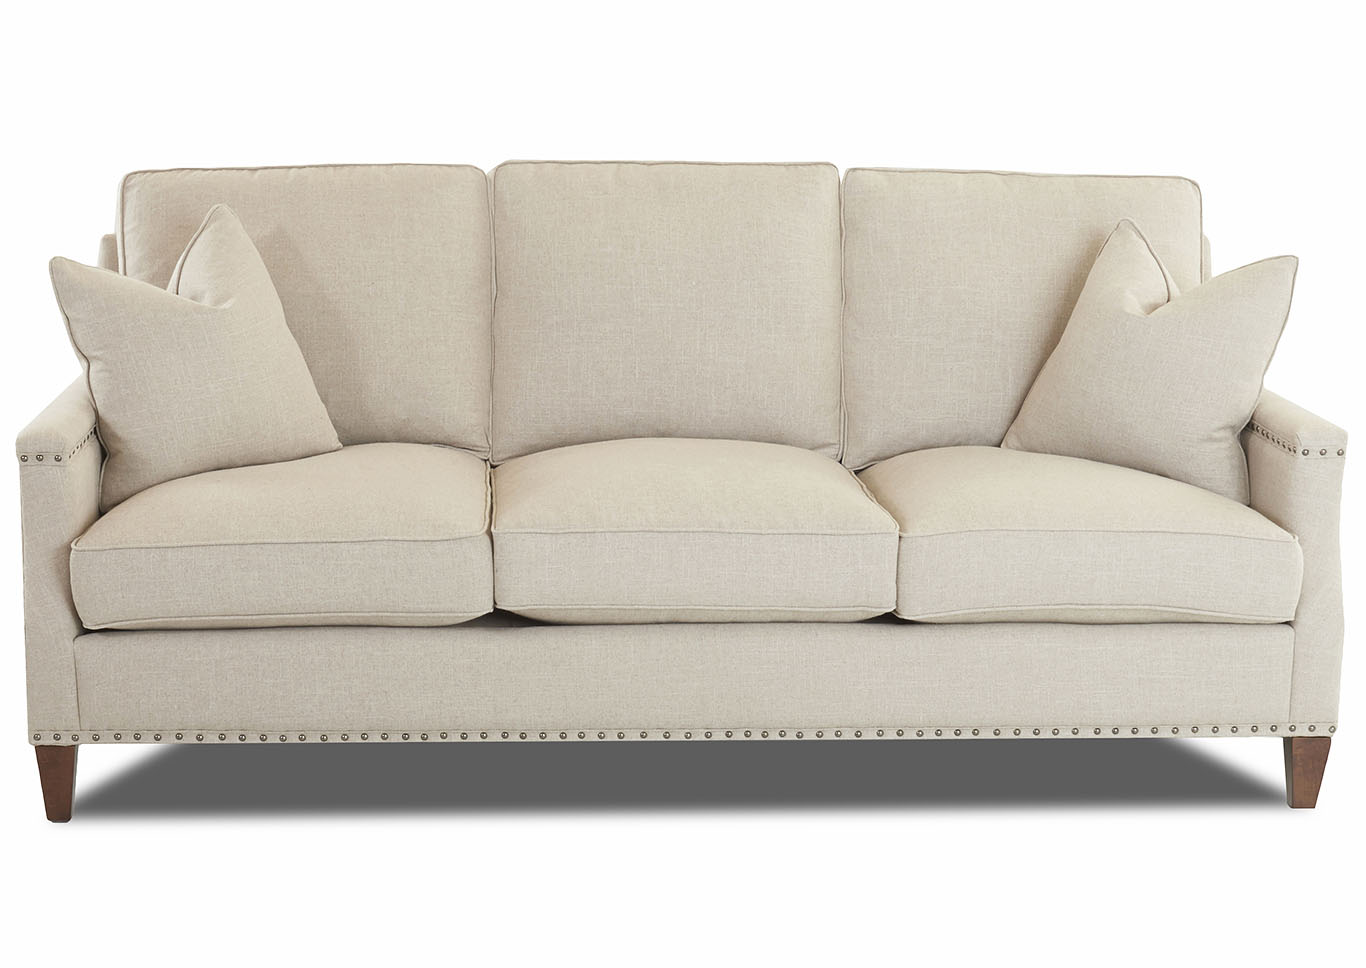 Bond Zula Linen Stationary Fabric Sofa,Klaussner Home Furnishings